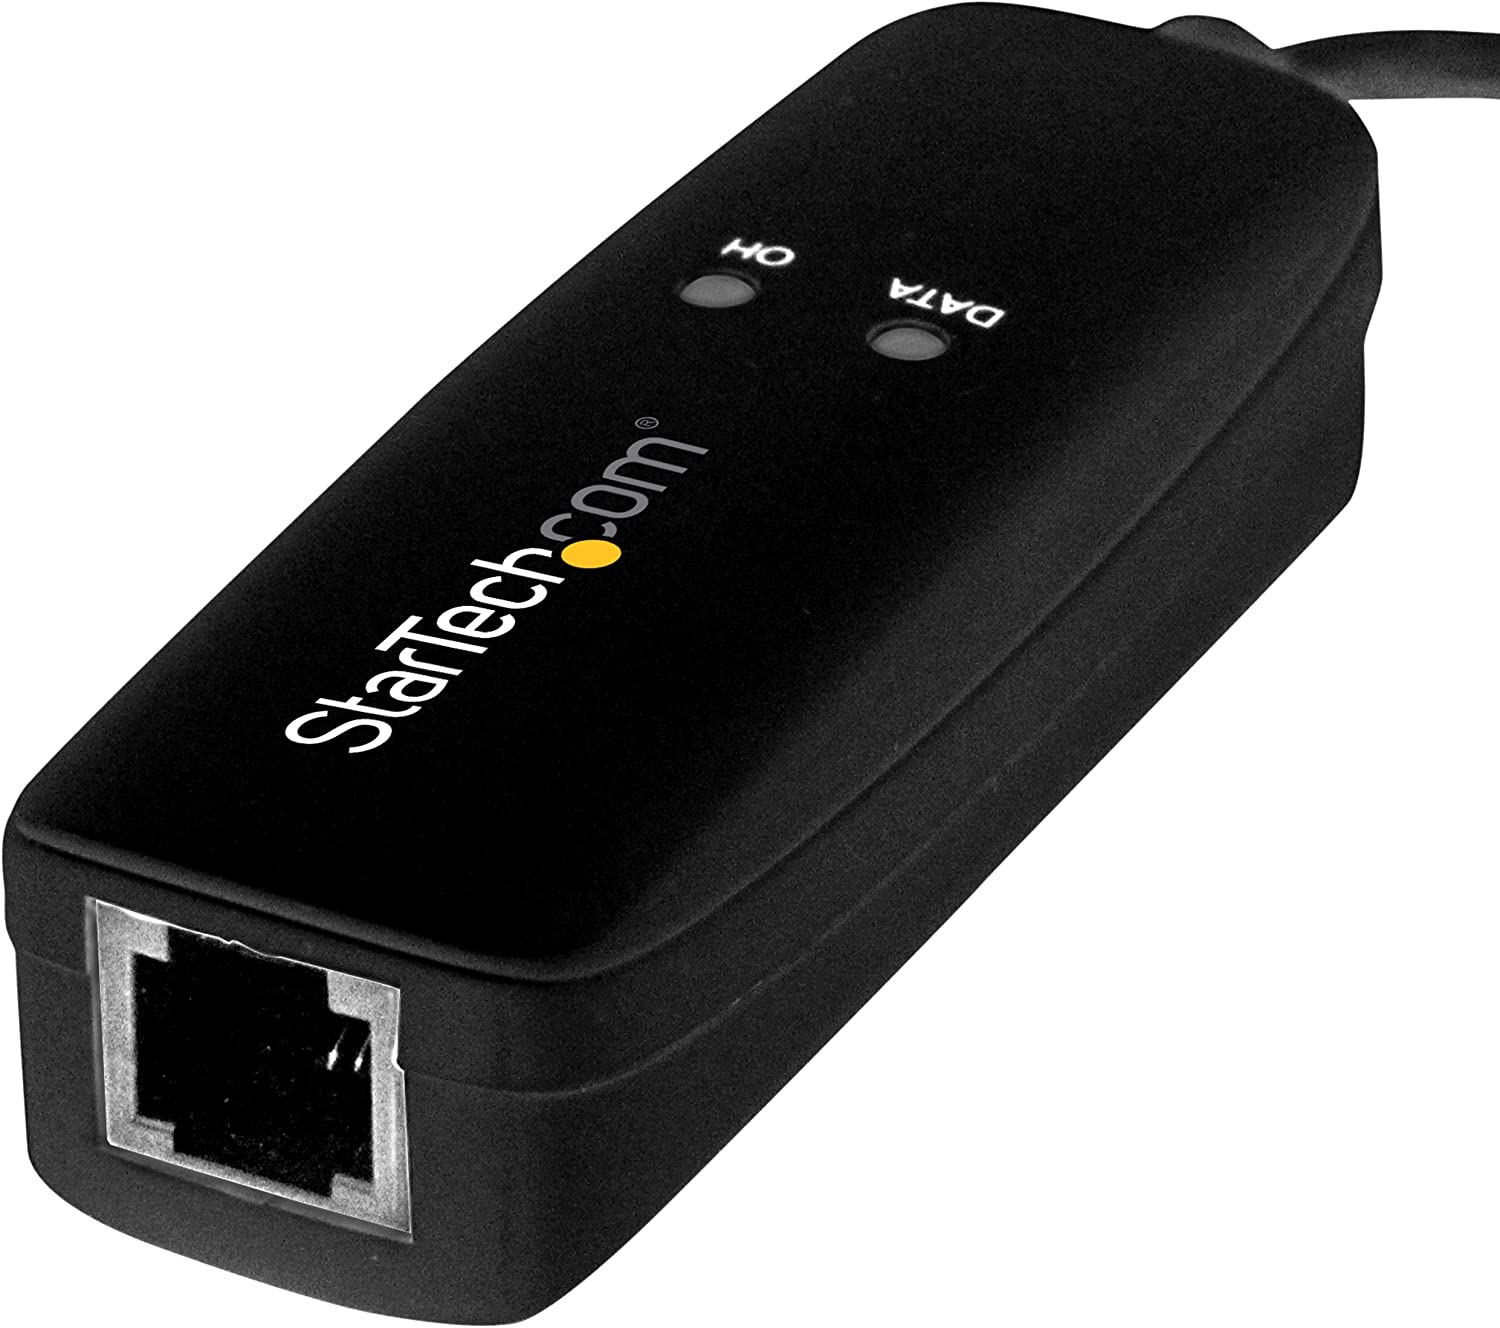 StarTech.com USB 2.0 Fax Modem - 56K External Hardware Dial Up V.92 Modem/ Dongle/Adapter - Computer/Laptop Fax Modem - USB to Telephone Jack - USB Data Modem - Network Fax/CMR/POS (USB56KEMH2)